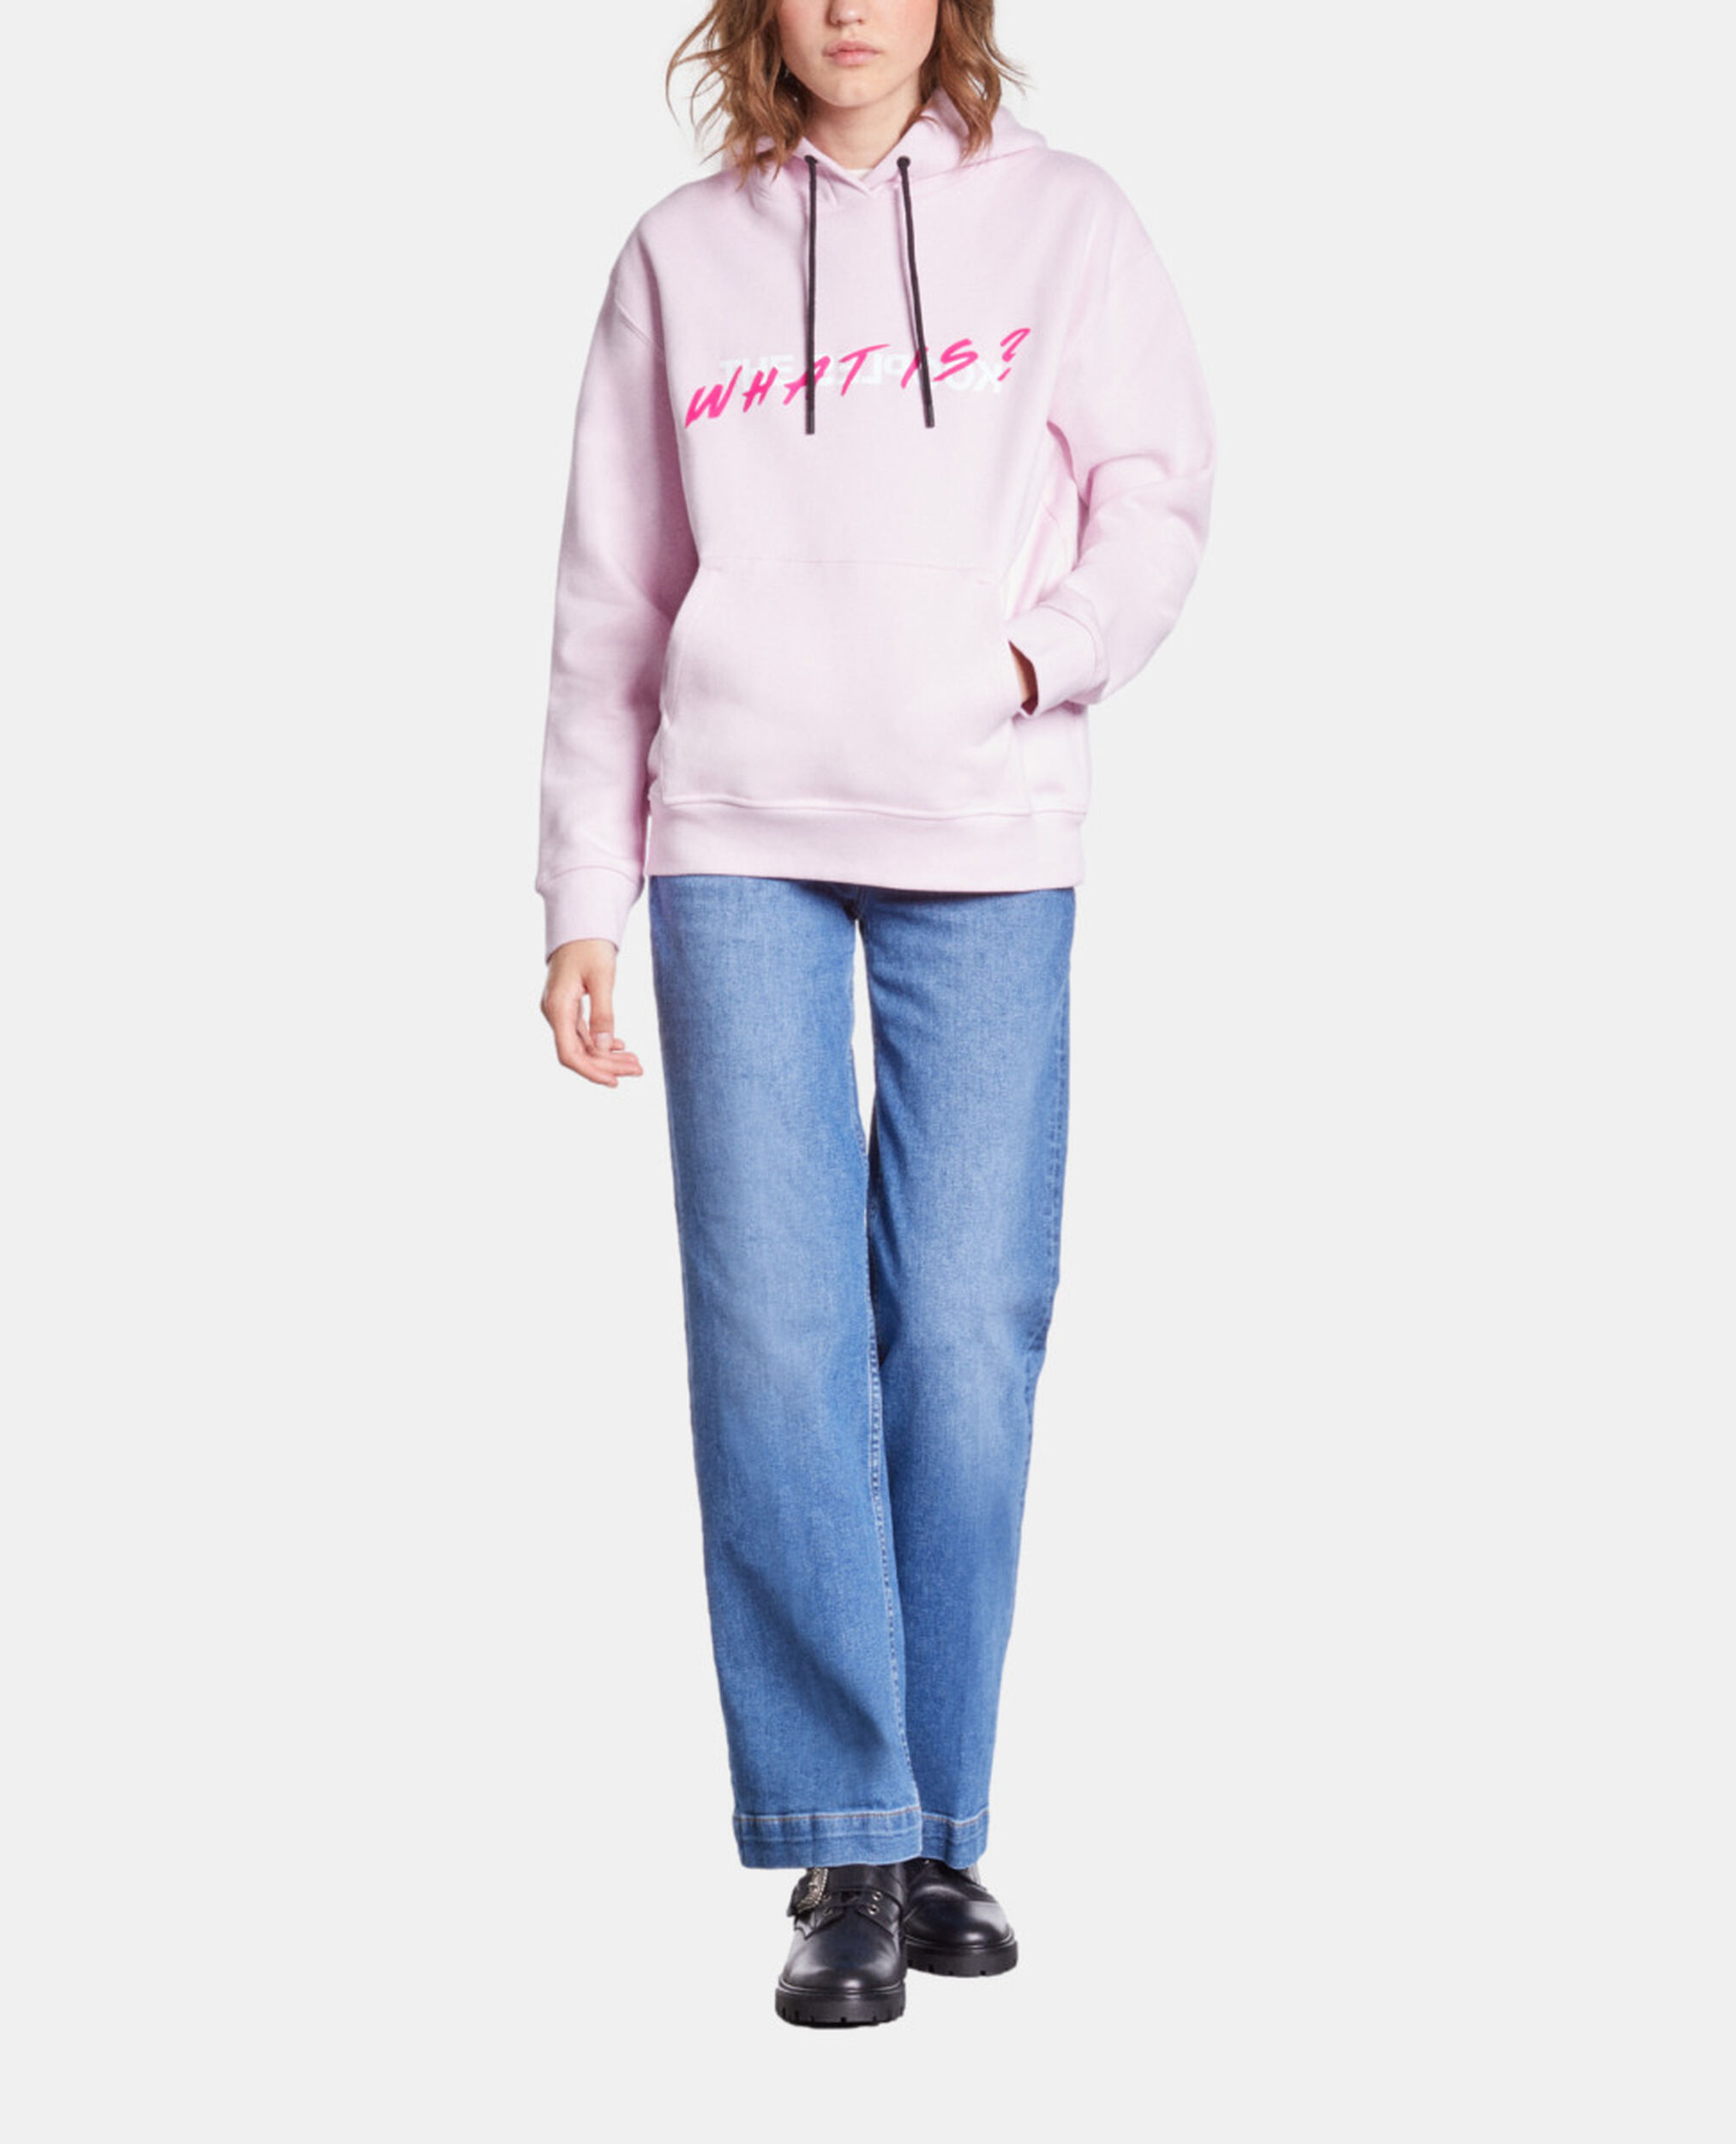 Women's Pink What is hoodie, PALE PINK, hi-res image number null